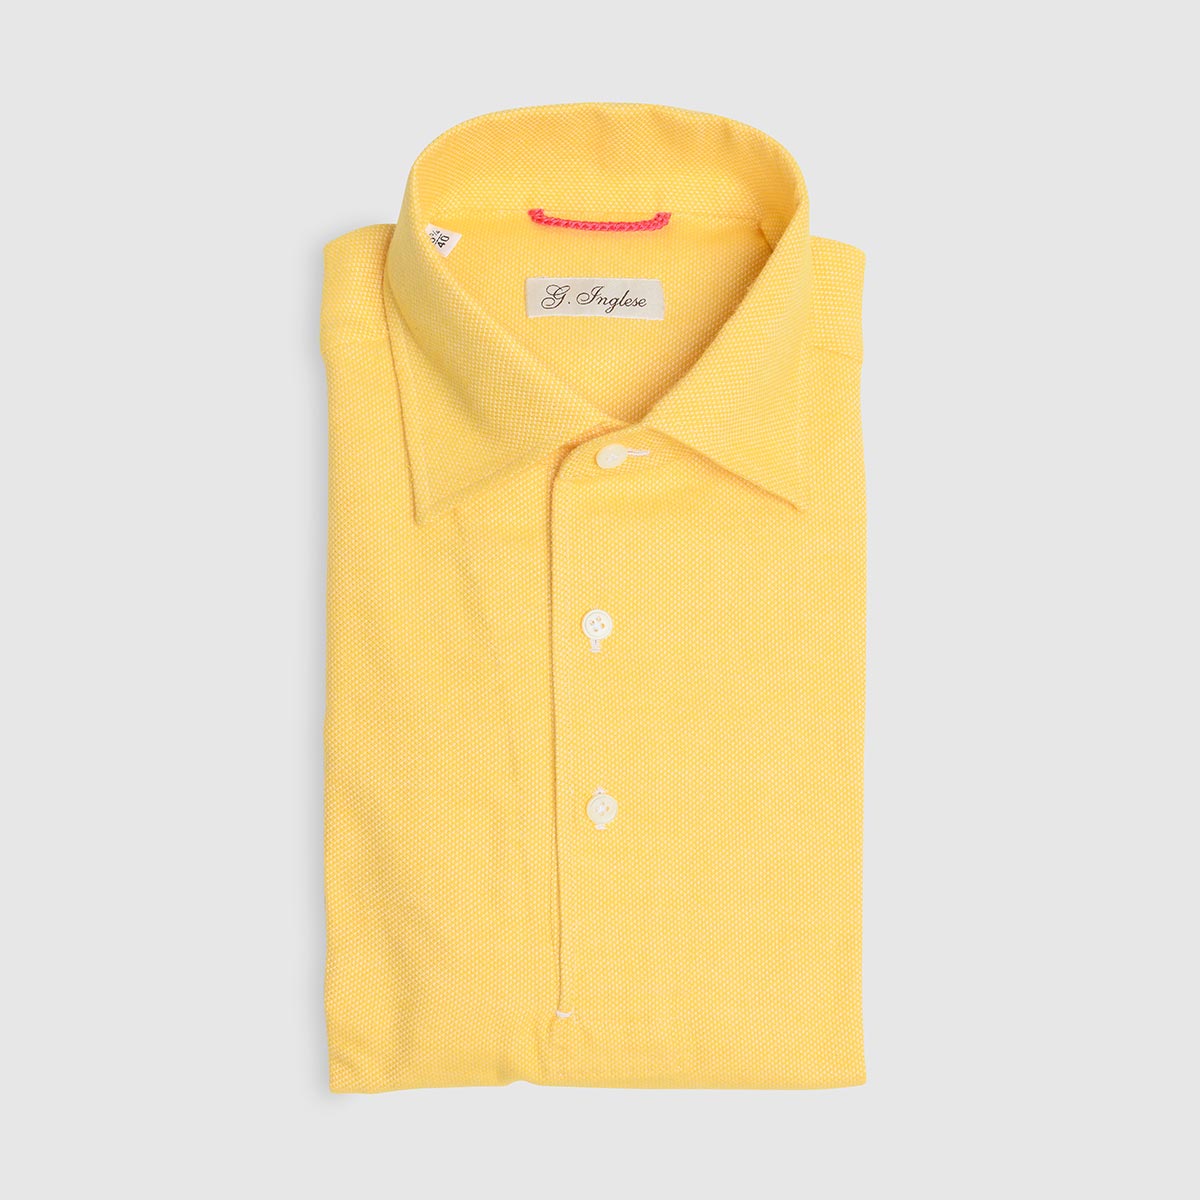 Mastroianni Yellow Cotton Flannel Polo Shirt G. Inglese on sale 2022